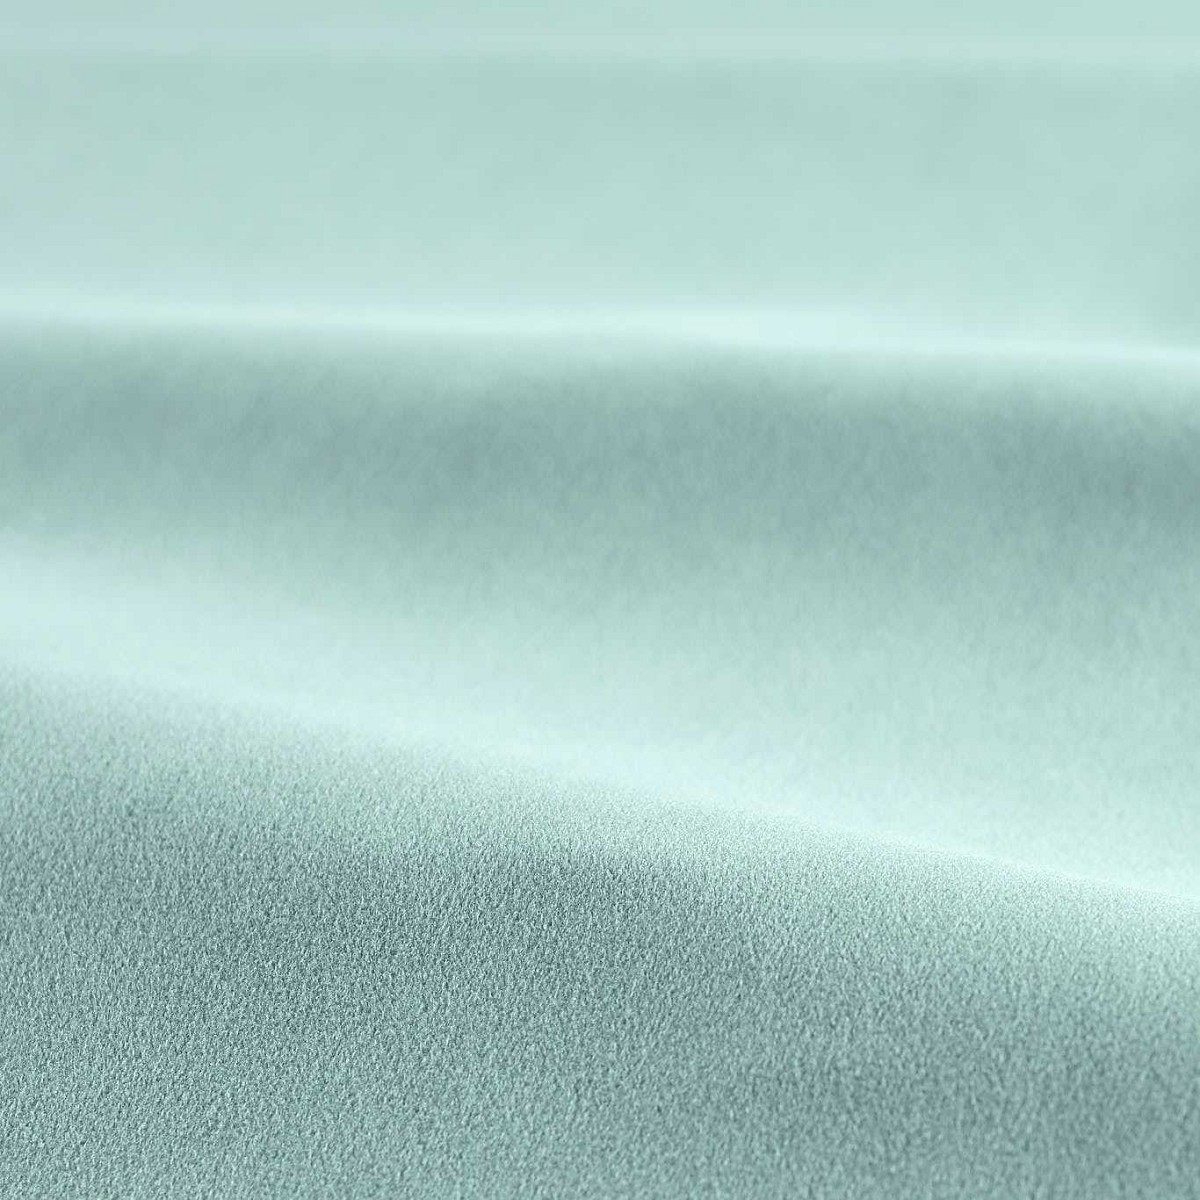 Performance Velvet Glacier Fabric by Harlequin